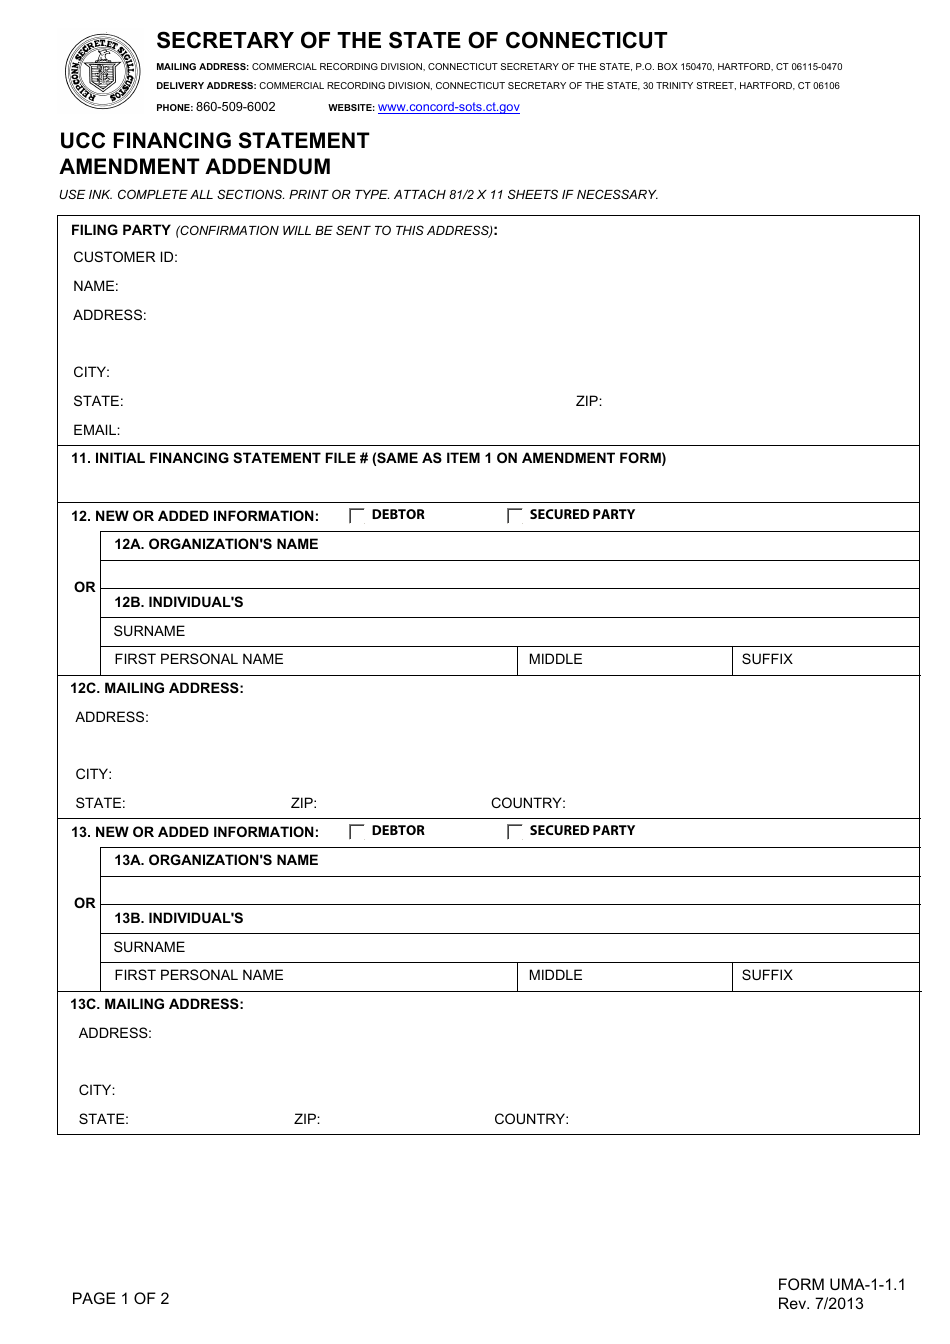 Form UMA-1-1.1 Ucc Financing Statement Amendment Addendum - Connecticut, Page 1